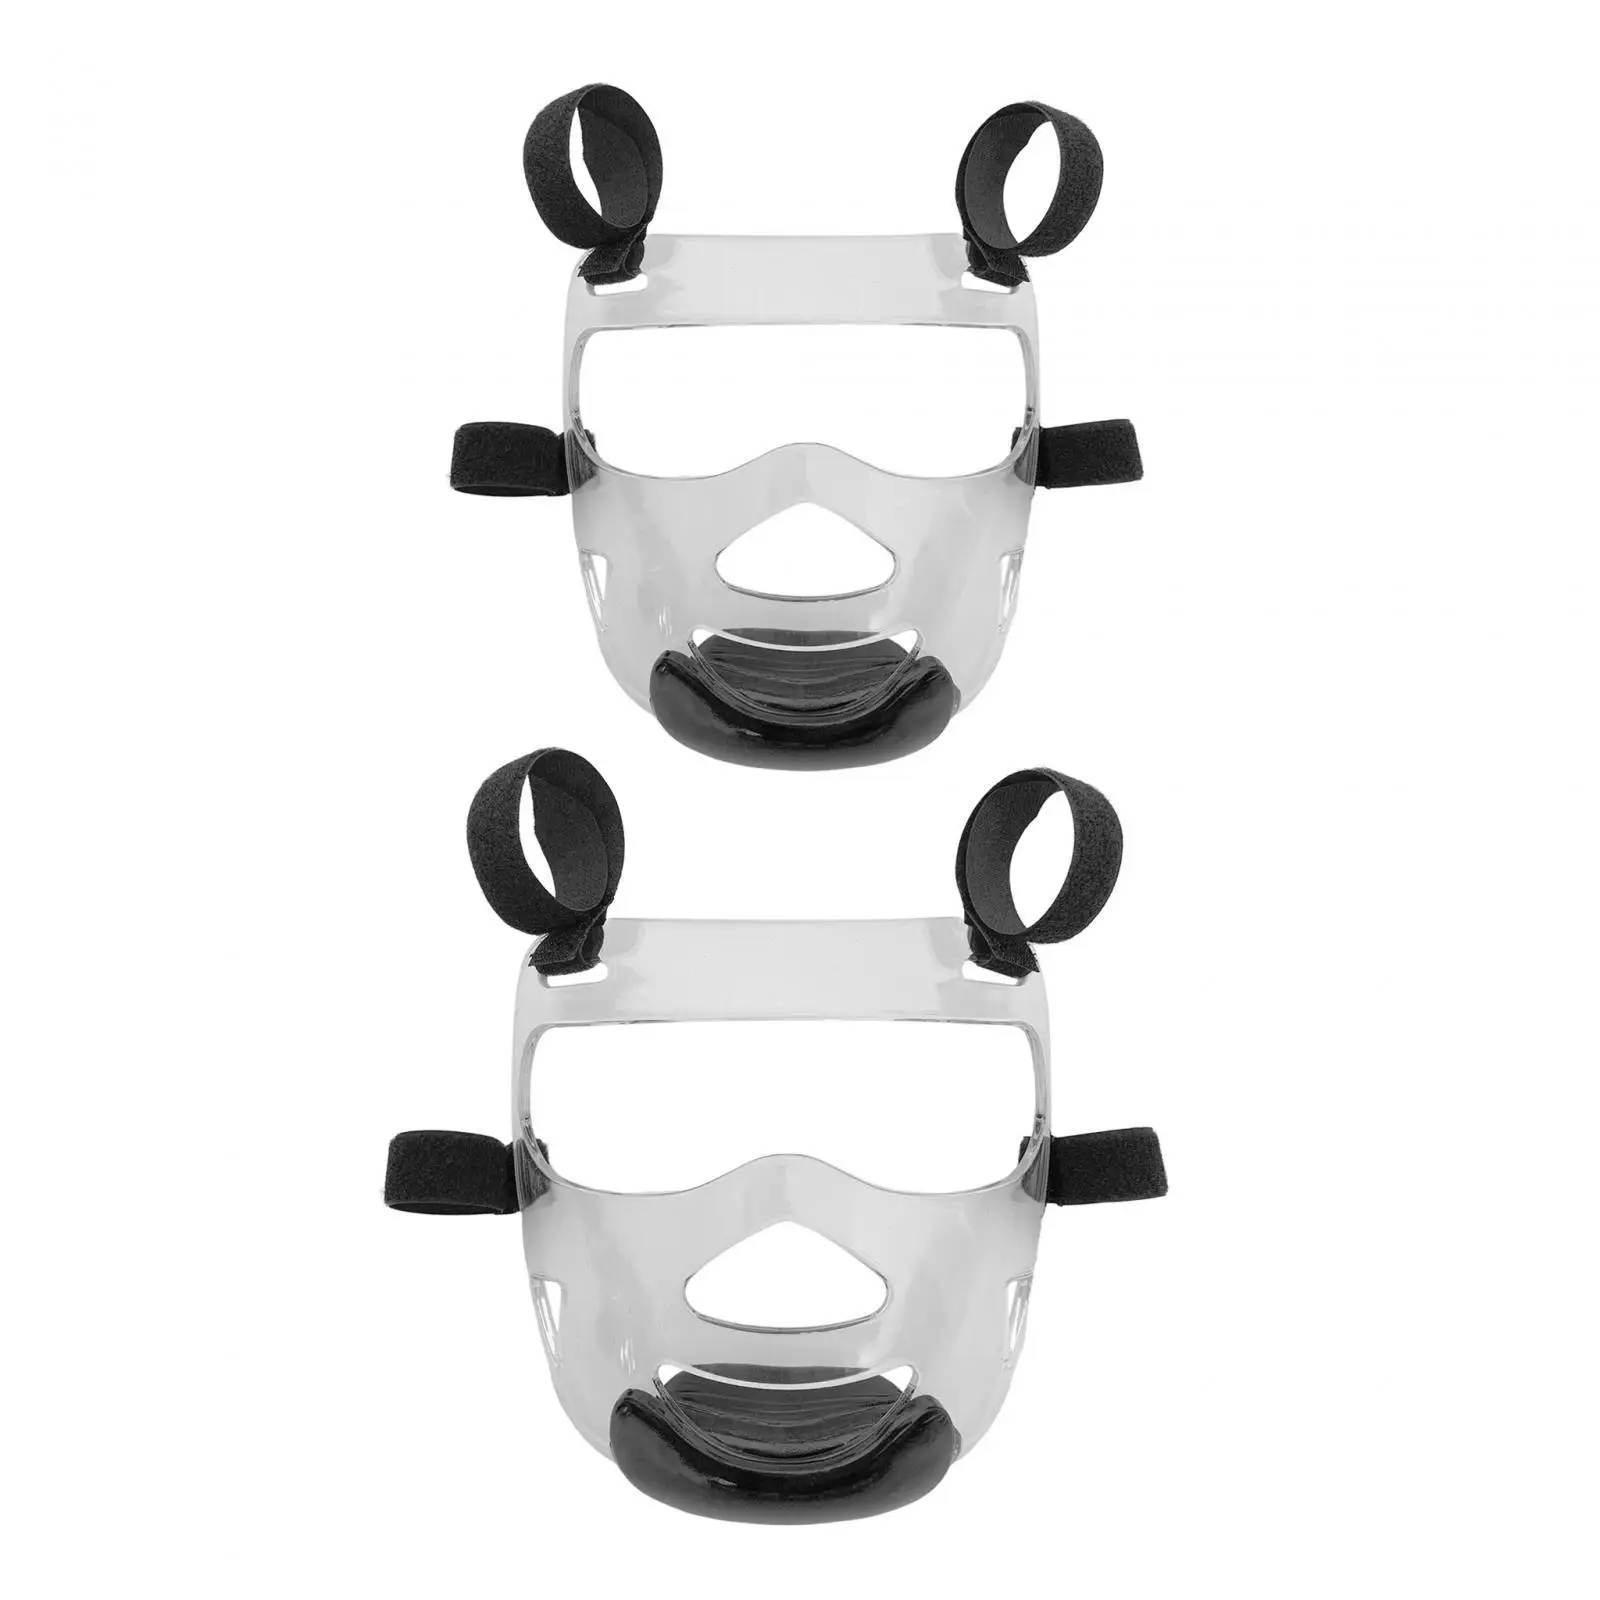 Taekwondo Mask Taekwondo Face Shield Protective Thickening Boxing Headgear Sparring Mask for Boxing Sparring Sanda Martial Arts